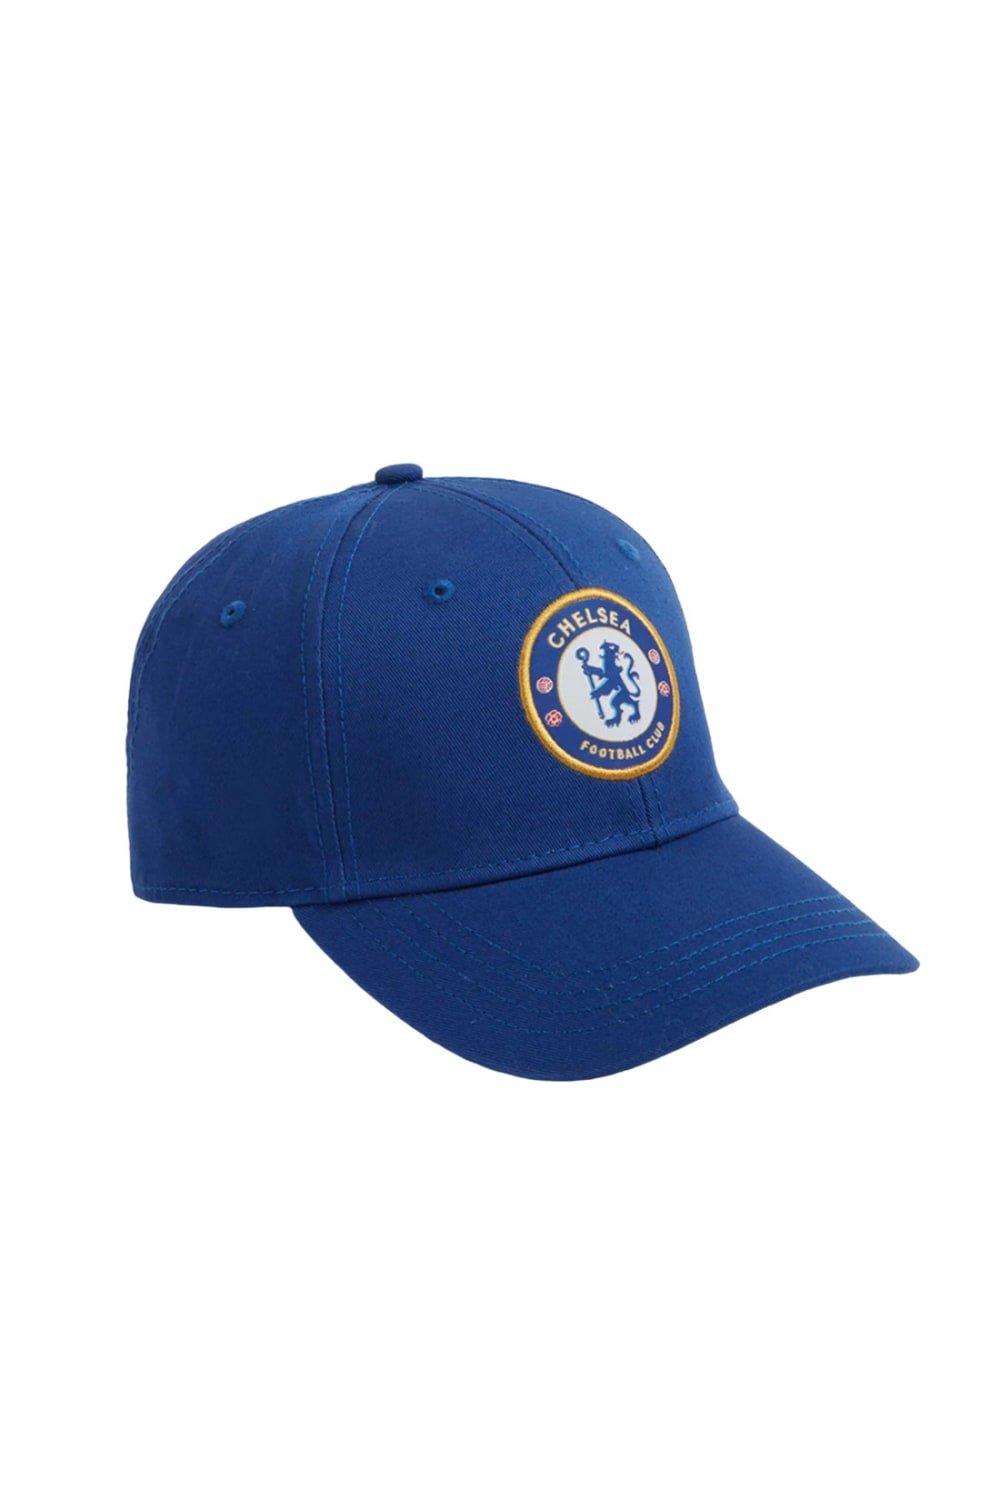 Chelsea FC Baseball Cap|blue